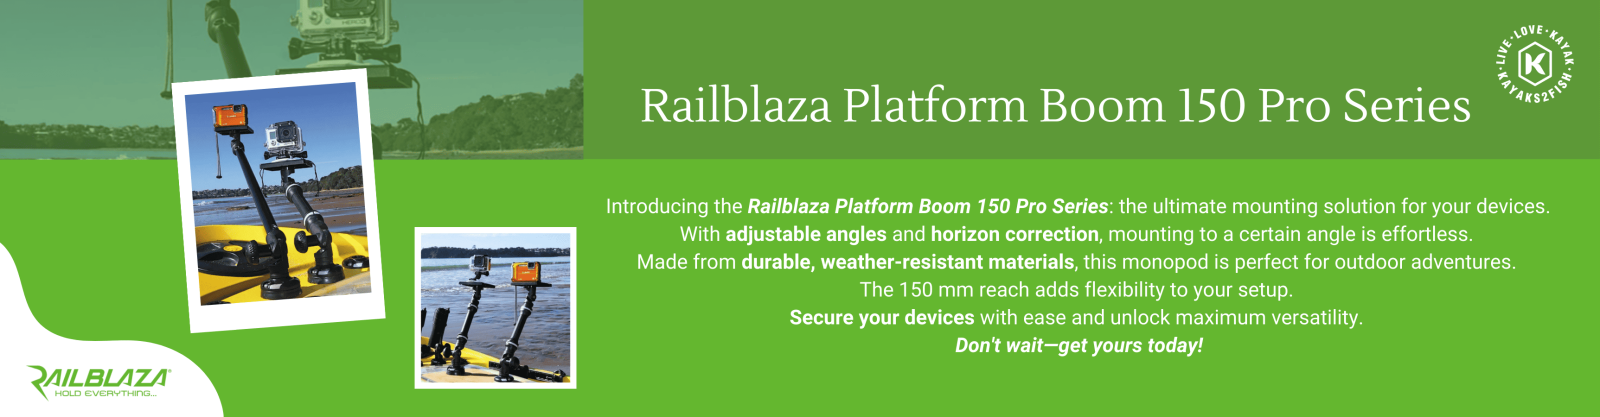 Railblaza Platform Boom 150 Pro Series